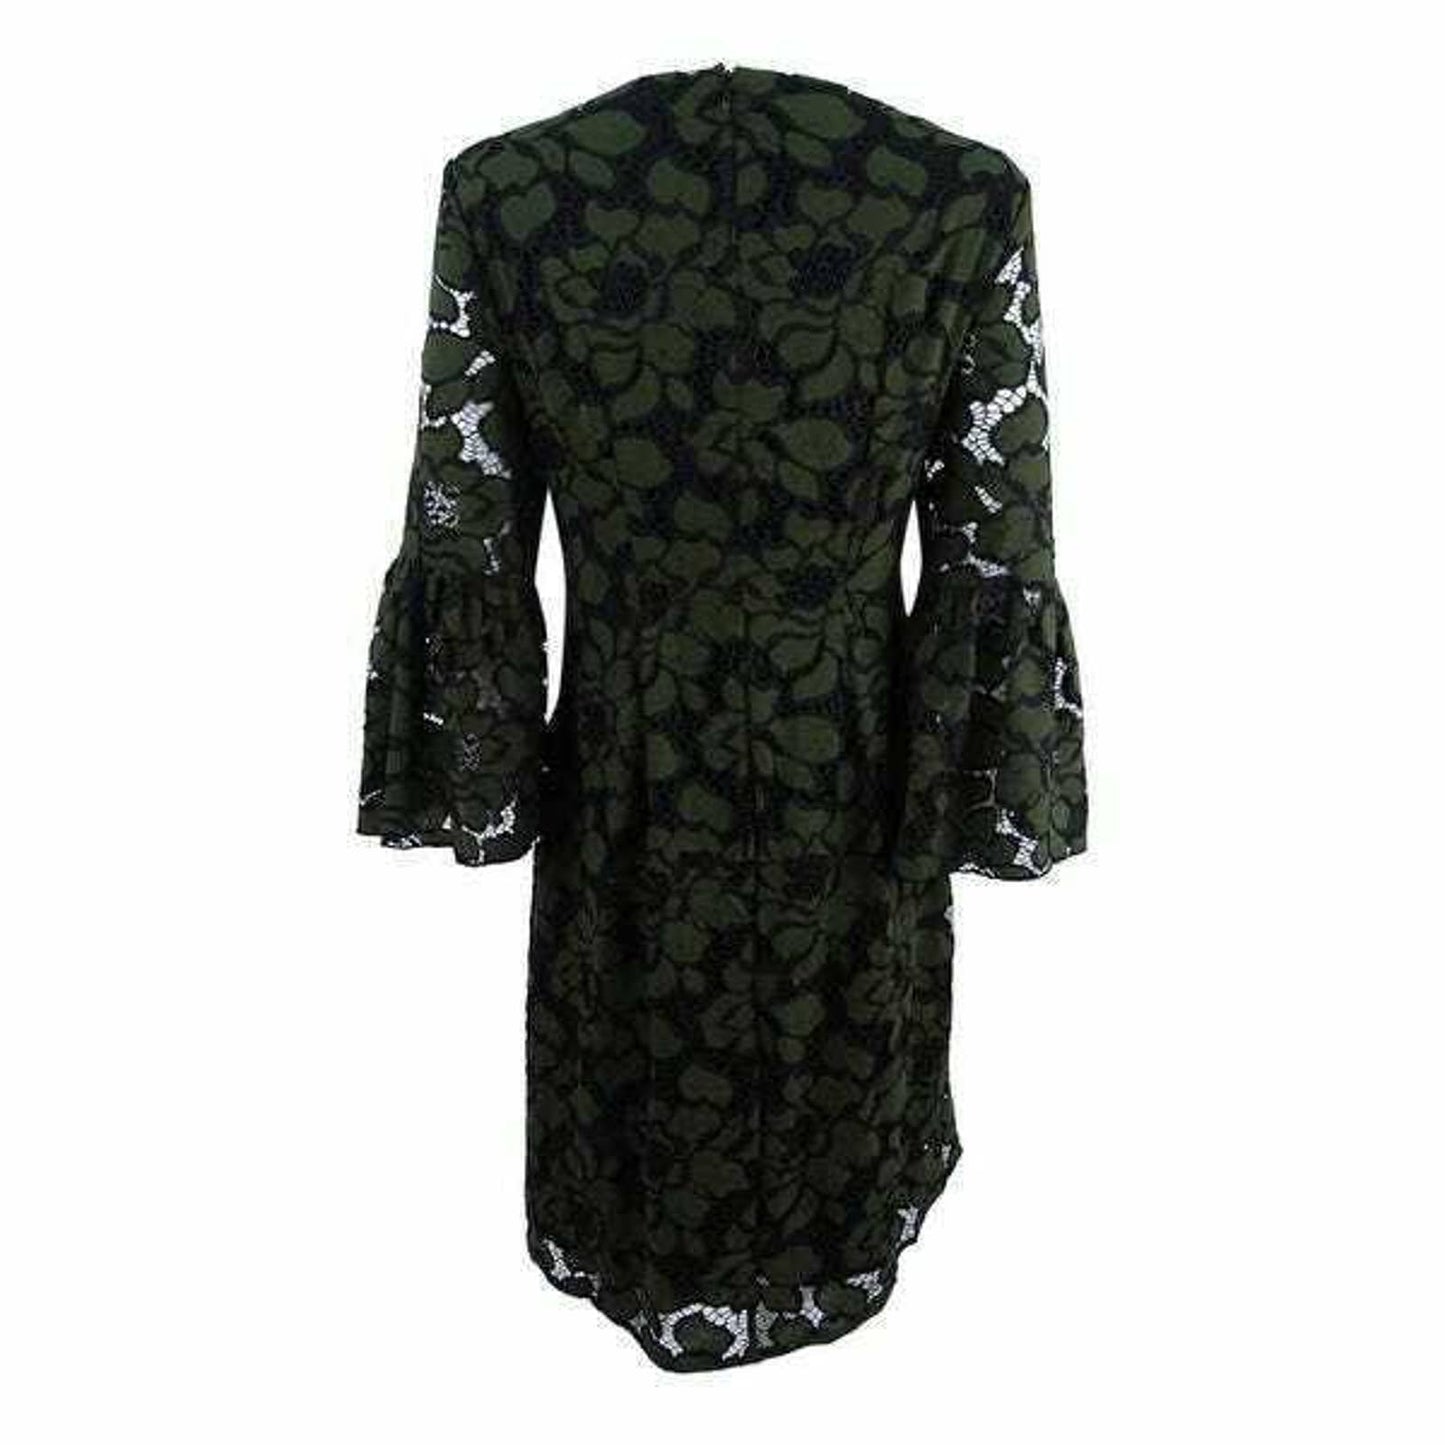 ALFANI LADIES AUTUMN MOSS CROCHET LACE BELL SLEEVE DRESS, BLACK/MOSS, 12,NWT